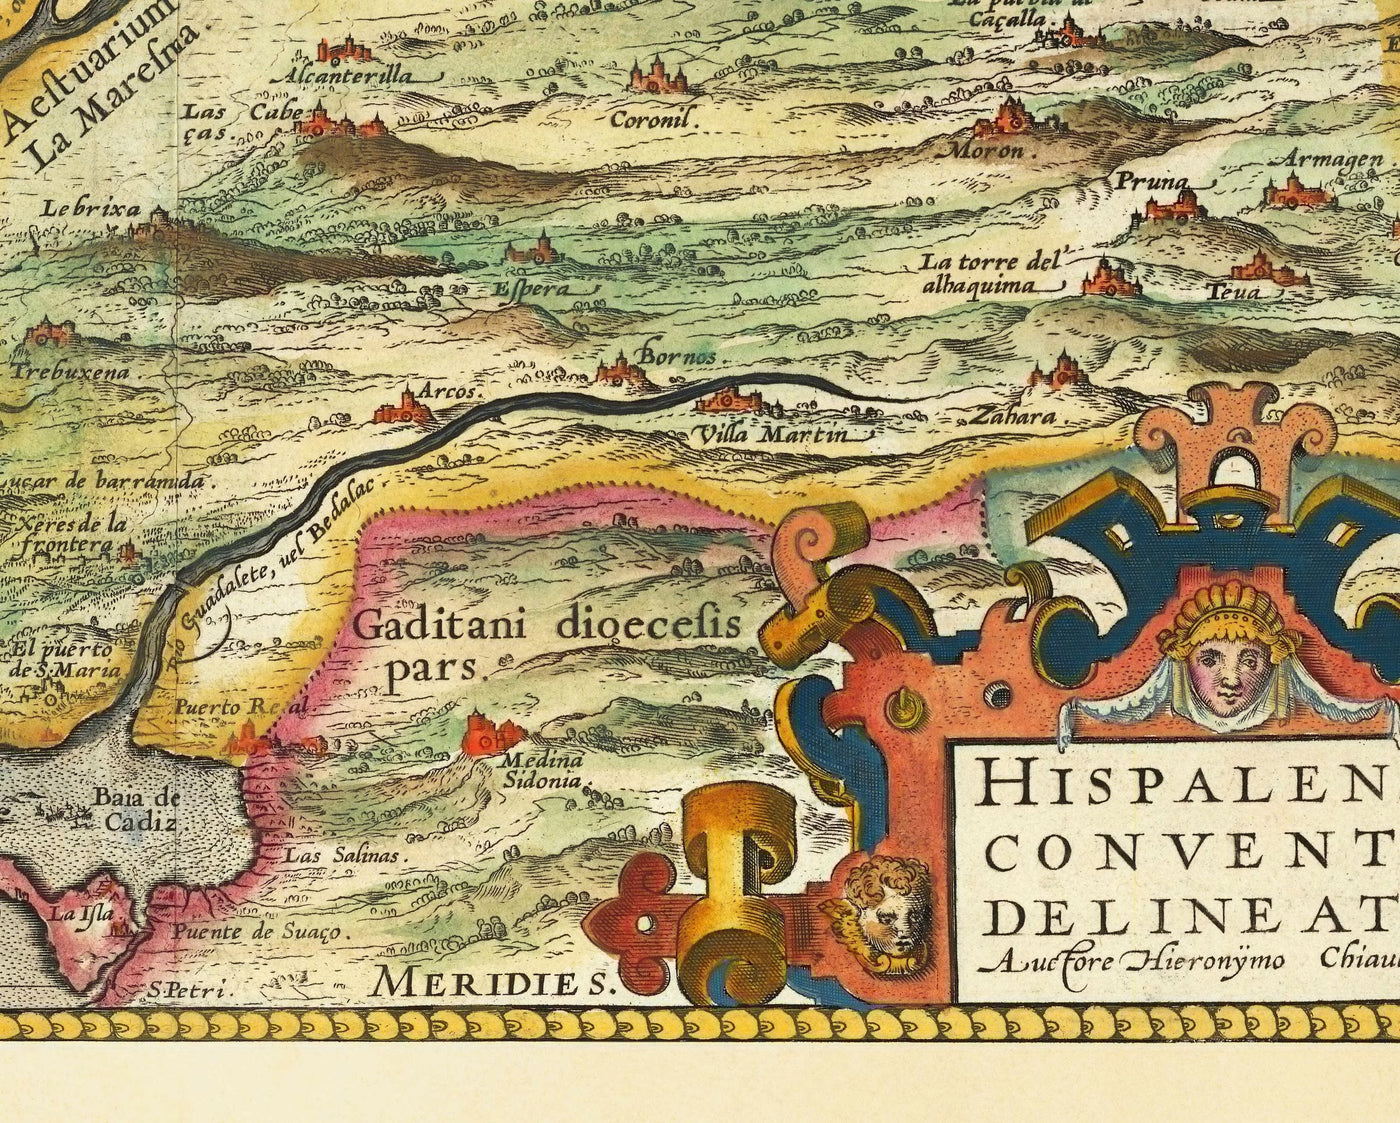 Old Map of Andalusia, Seville, Spain by Ortelius in 1573 - Sevilla, Huelva, Cadiz, Barrameda, Santa María, Real